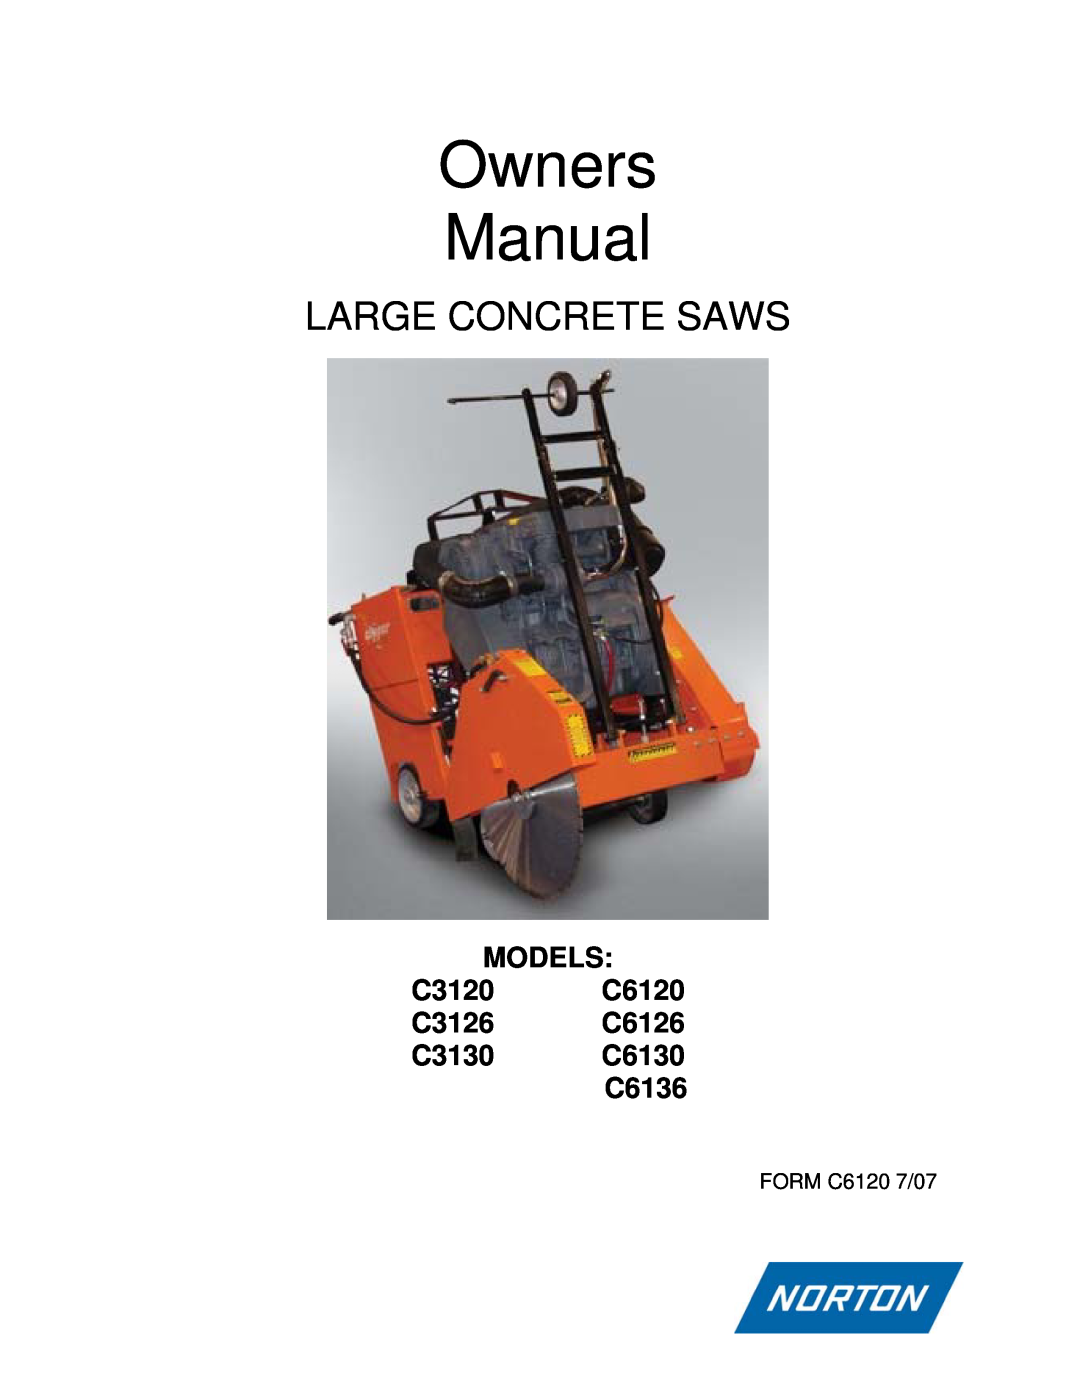 Norton Abrasives owner manual MODELS C3120 C6120 C3126 C6126 C3130 C6130 C6136, Owners Manual, Large Concrete Saws 